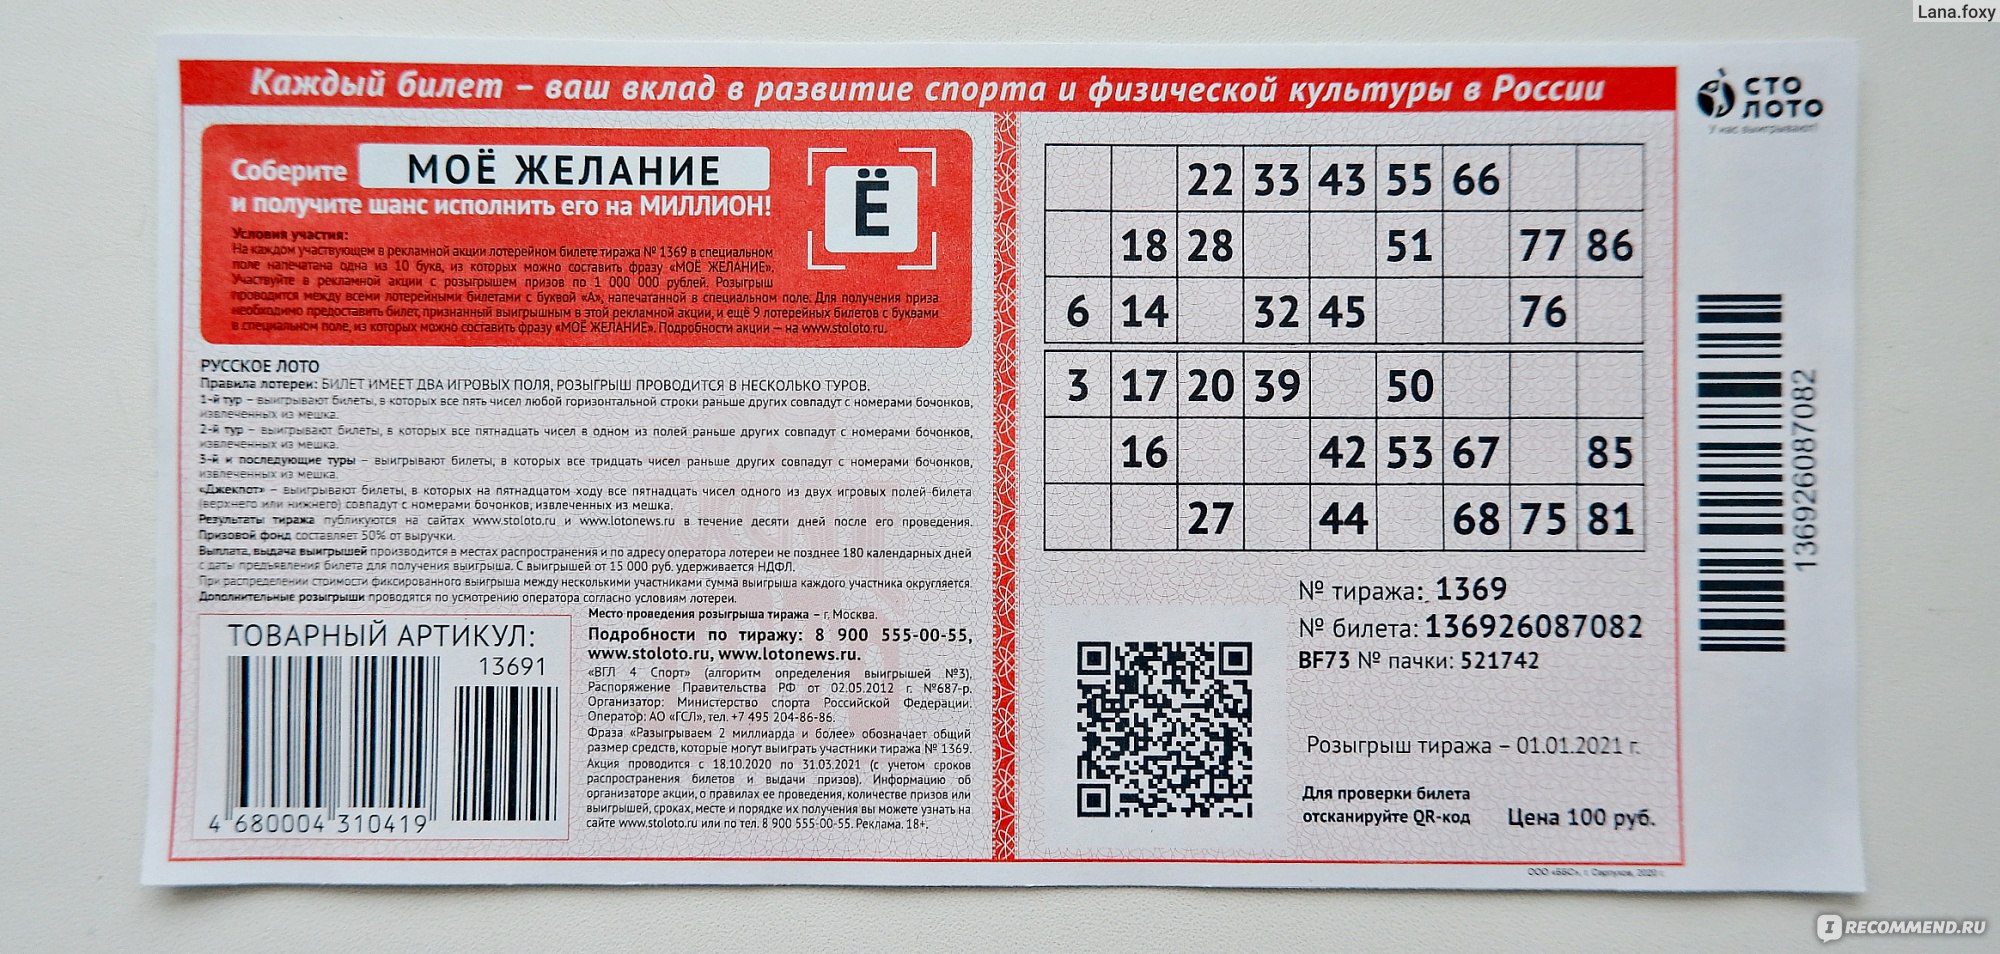 Русское лото 5 мая. Русское лото 1 тираж. Номер билетв русскон лото. Номер лотерейного билета. Номер билета русское лото.